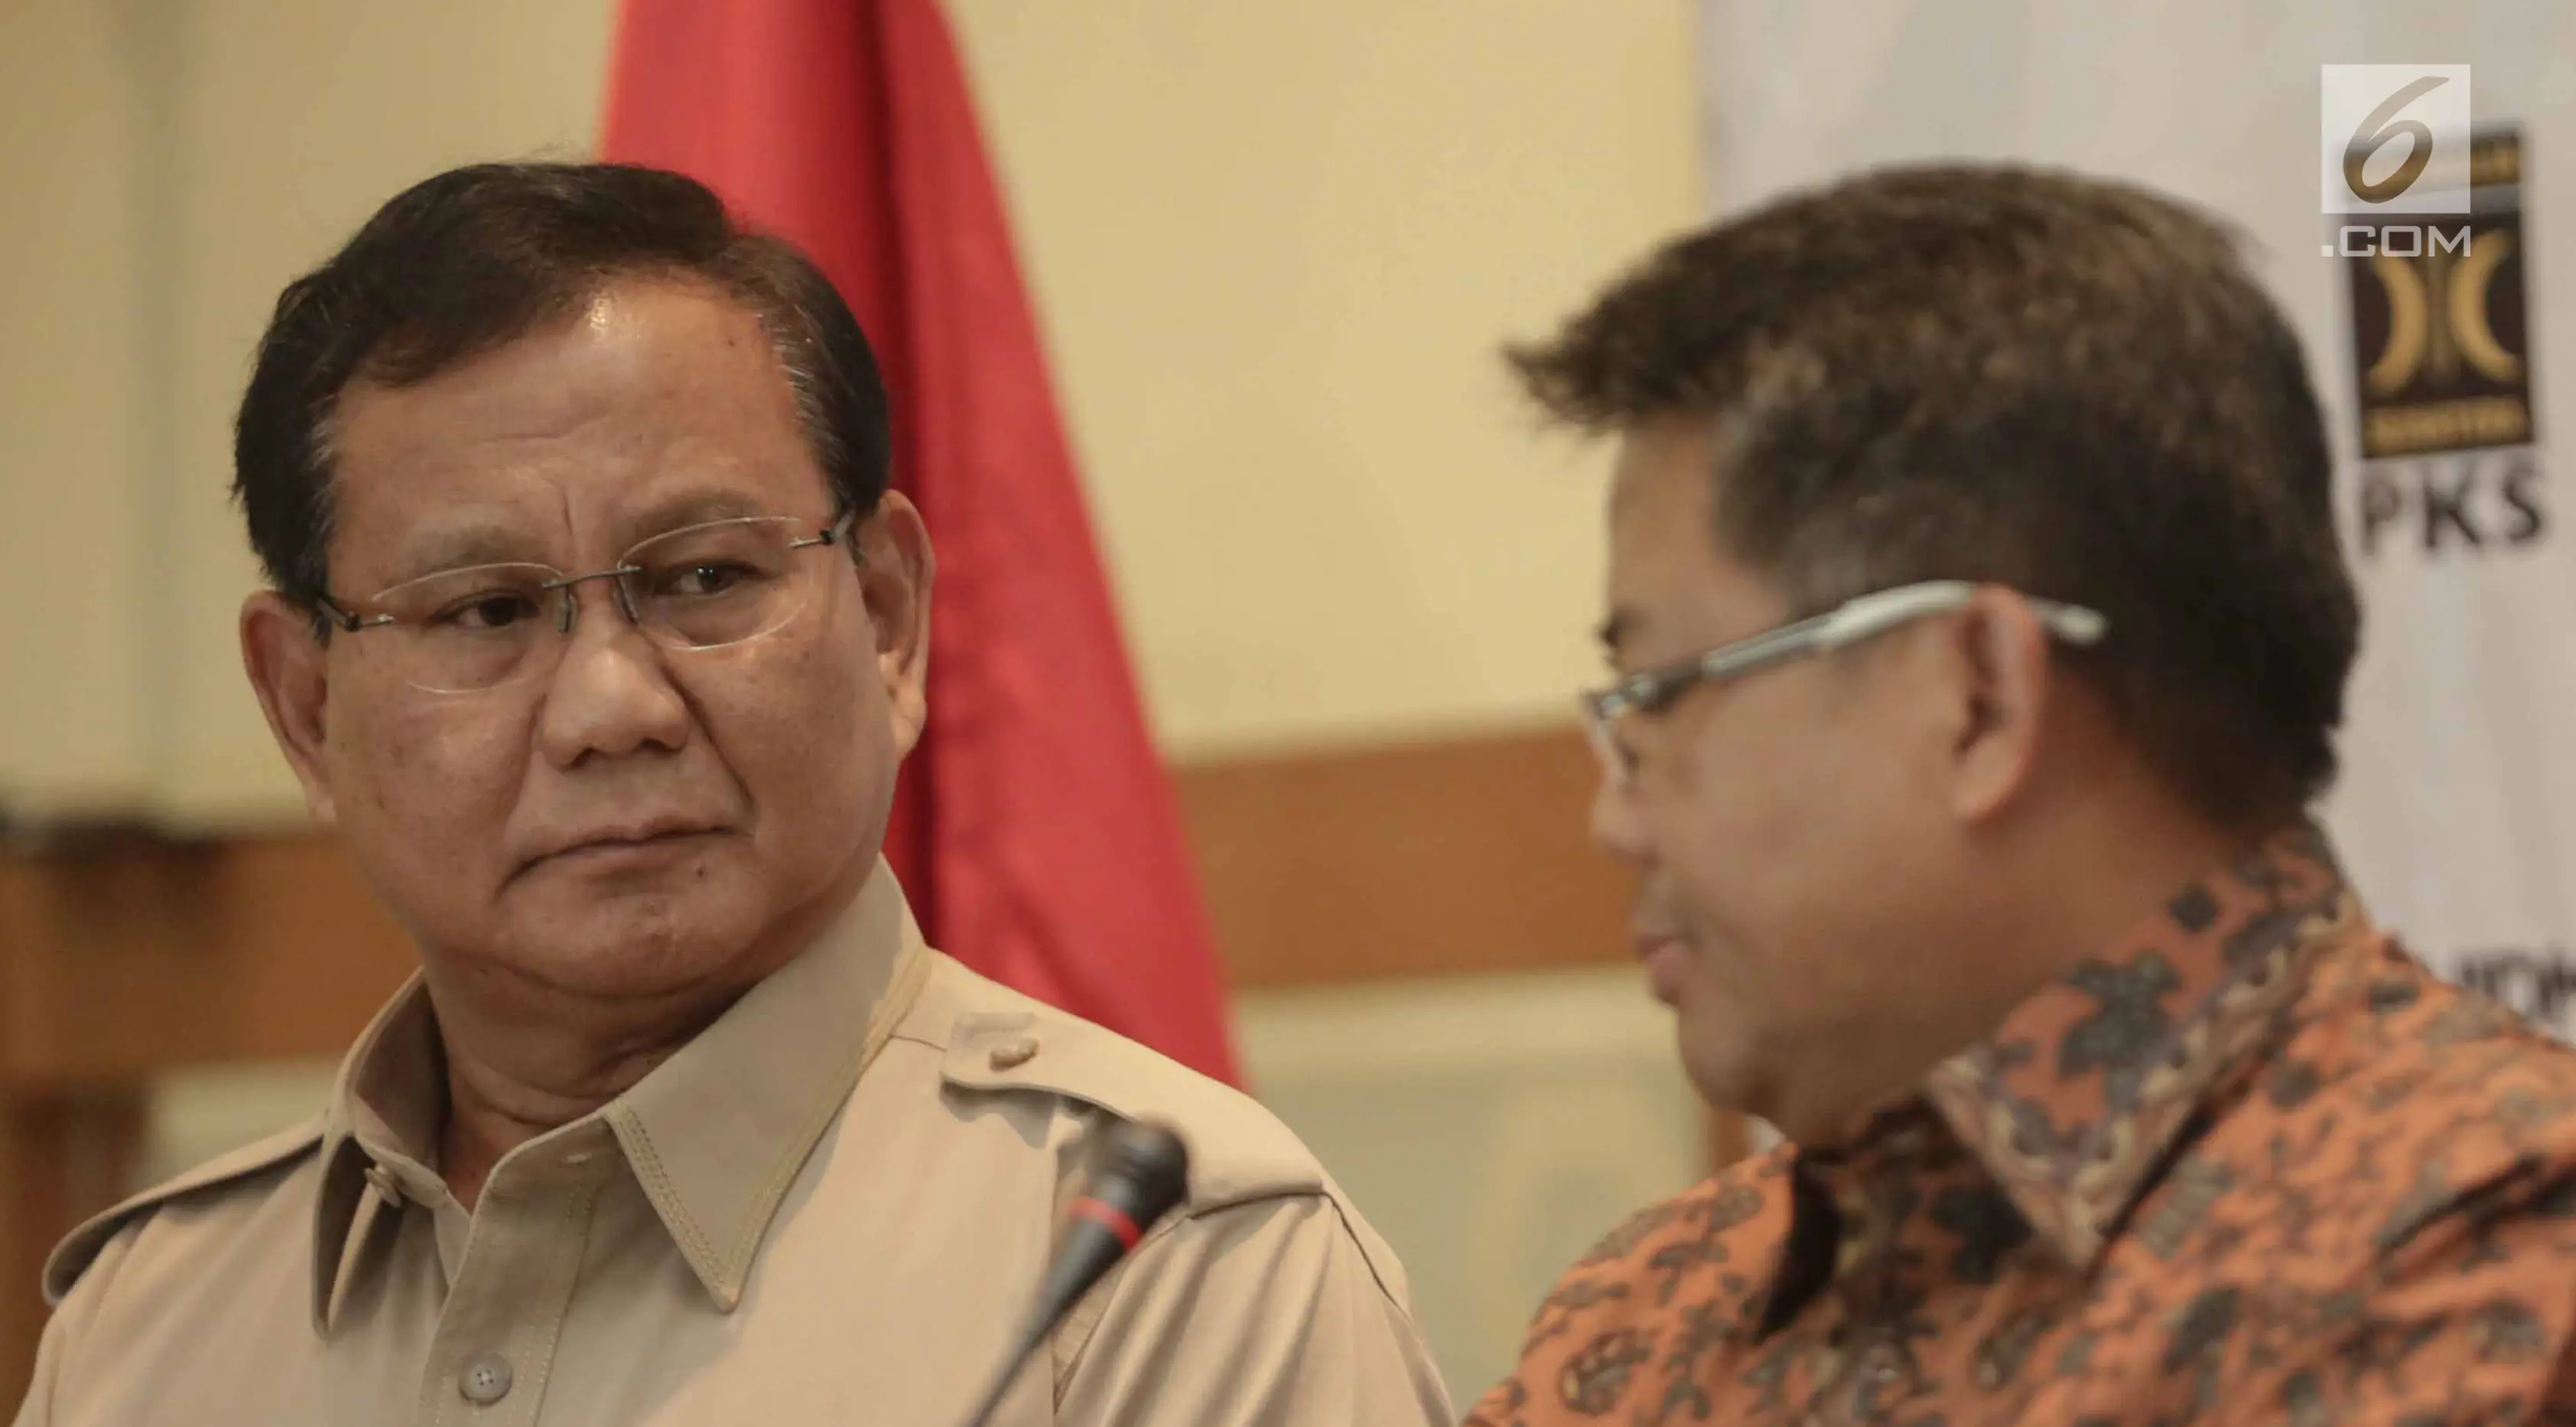 Ketum Partai Gerindra, Prabowo Subianto saat mendengarkan Presiden PKS, Sohibul Iman memberikan keterangan pers di Kantor PKS, Jakarta, Minggu (24/12). Gerindra, PAN, dan PKS, sepakat untuk berkoalisi di Pilkada Serentak. (Liputan6.com/Faizal Fanani)